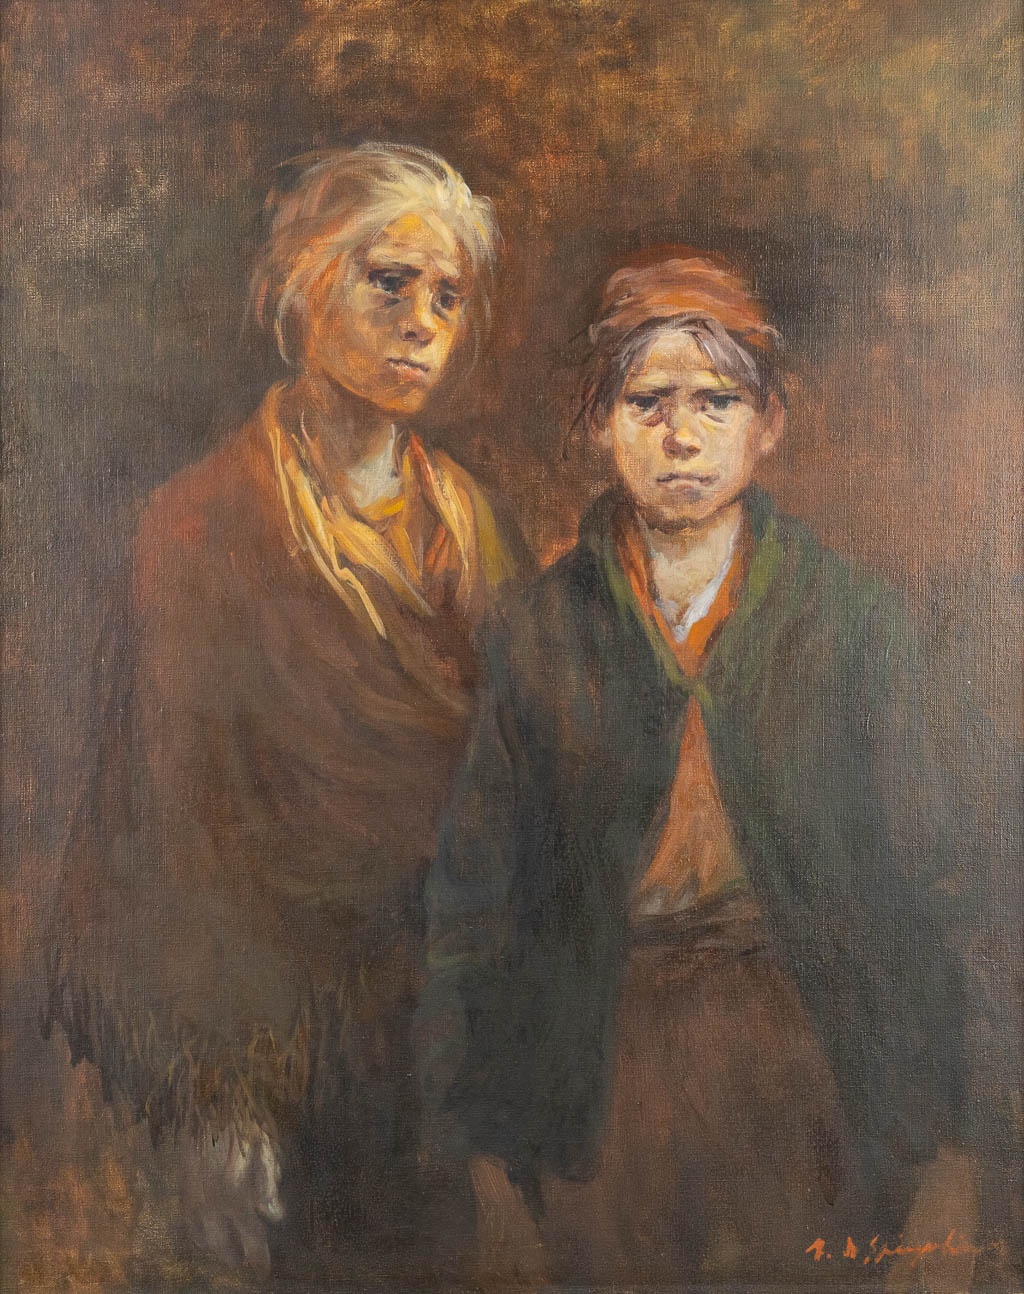 Marthe DE SPIEGELEIR (1897-1991) 'No Title' a painting, oil on canvas. 1972. (80 x 100 cm)